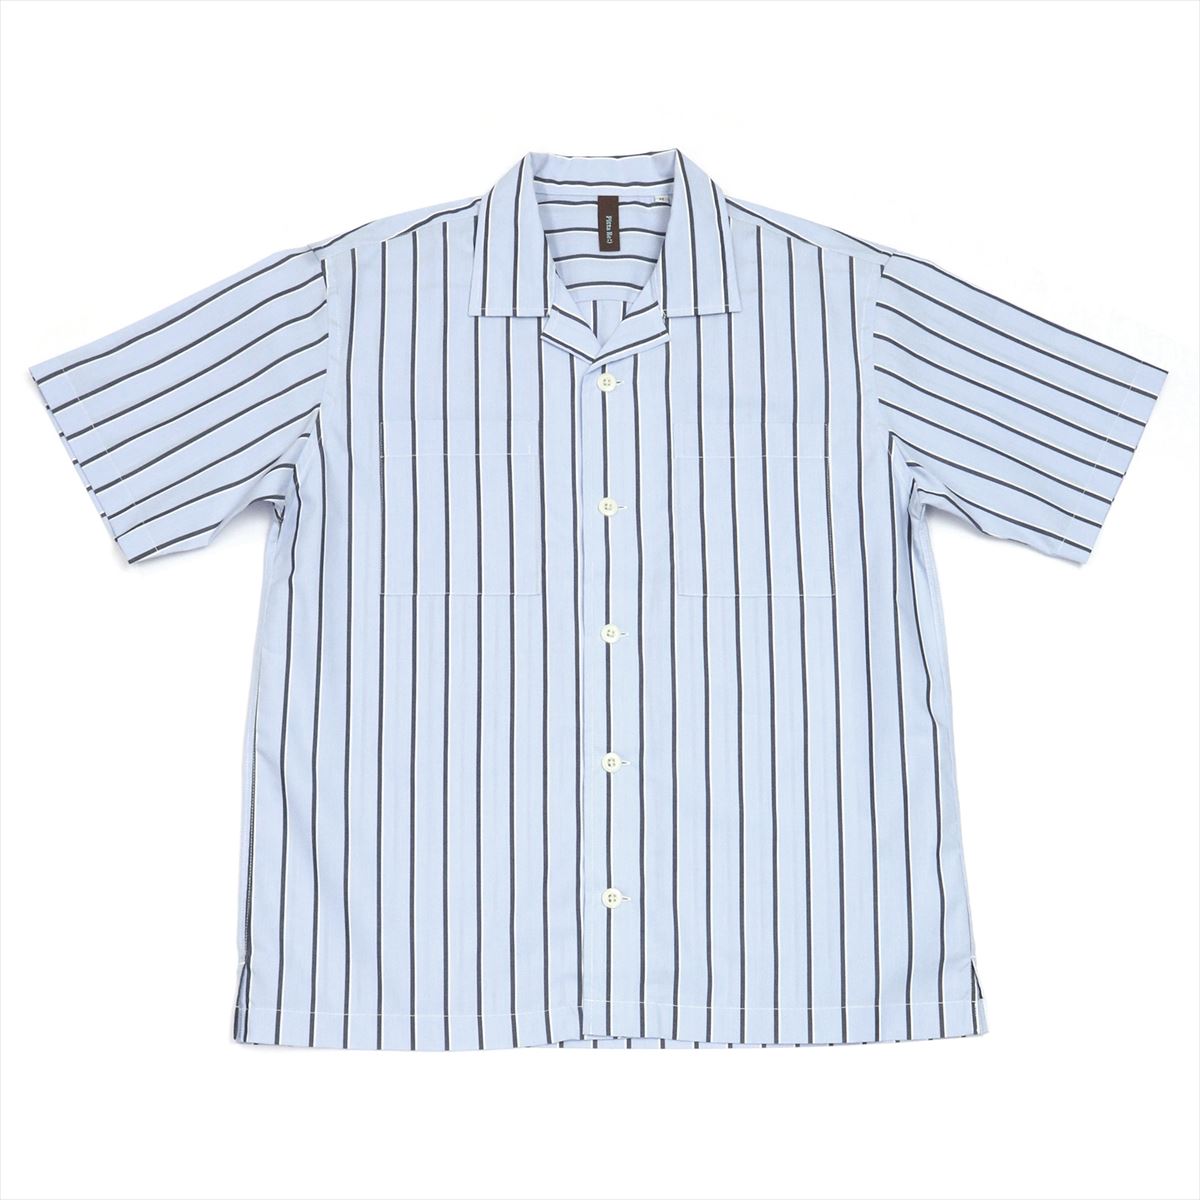 【50%OFF】【SALE】【Pitta Re:)】 オープンカラー 半袖 形態安定 綿100% カジュアルシャツ